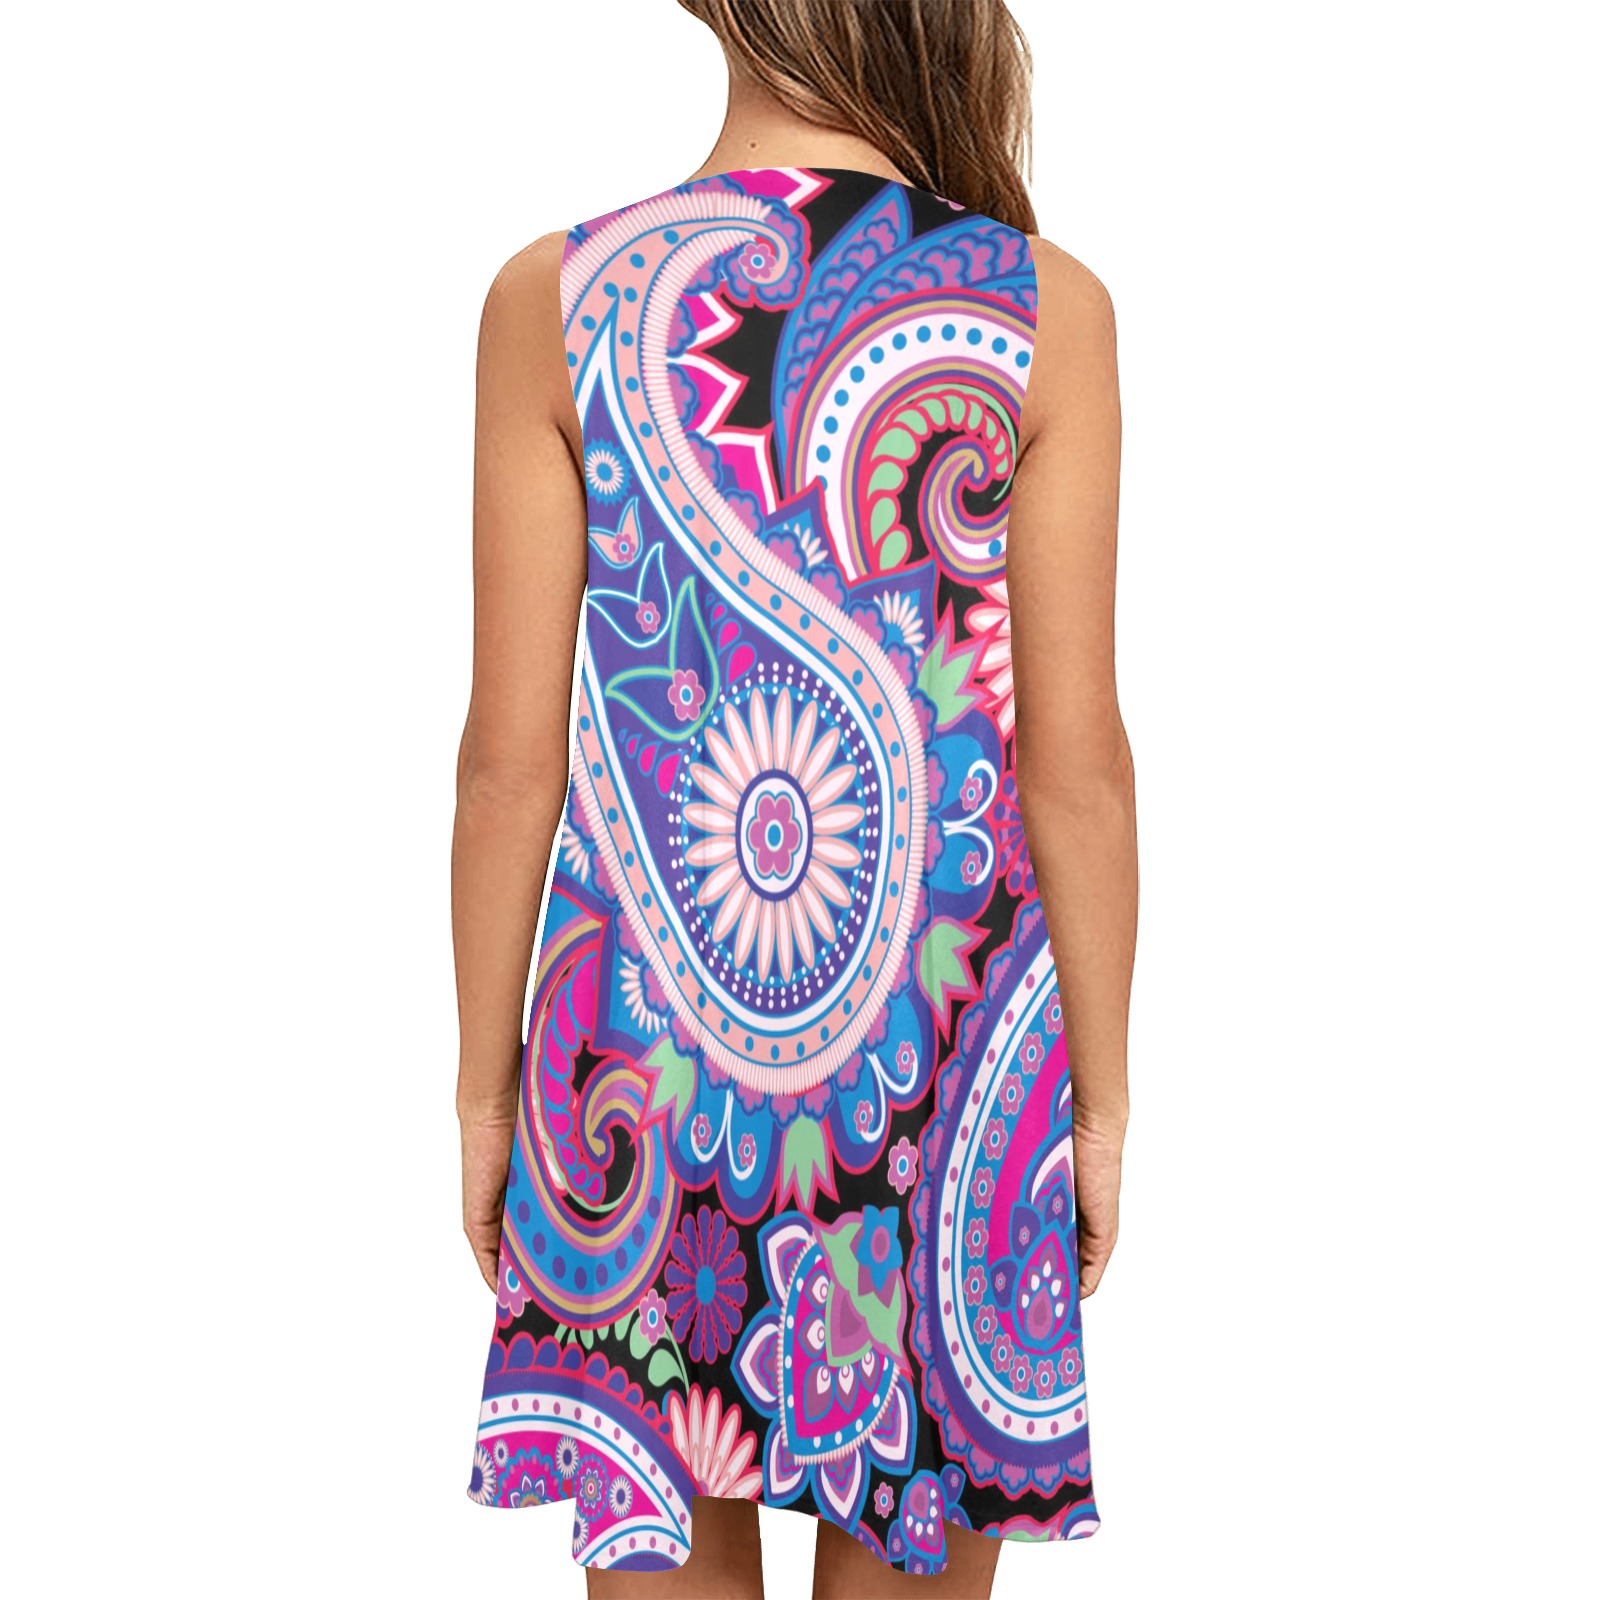 Seamless pattern based on traditional Asian elements Paisley_107916152.jpg Sleeveless A-Line Pocket Dress (Model D57)